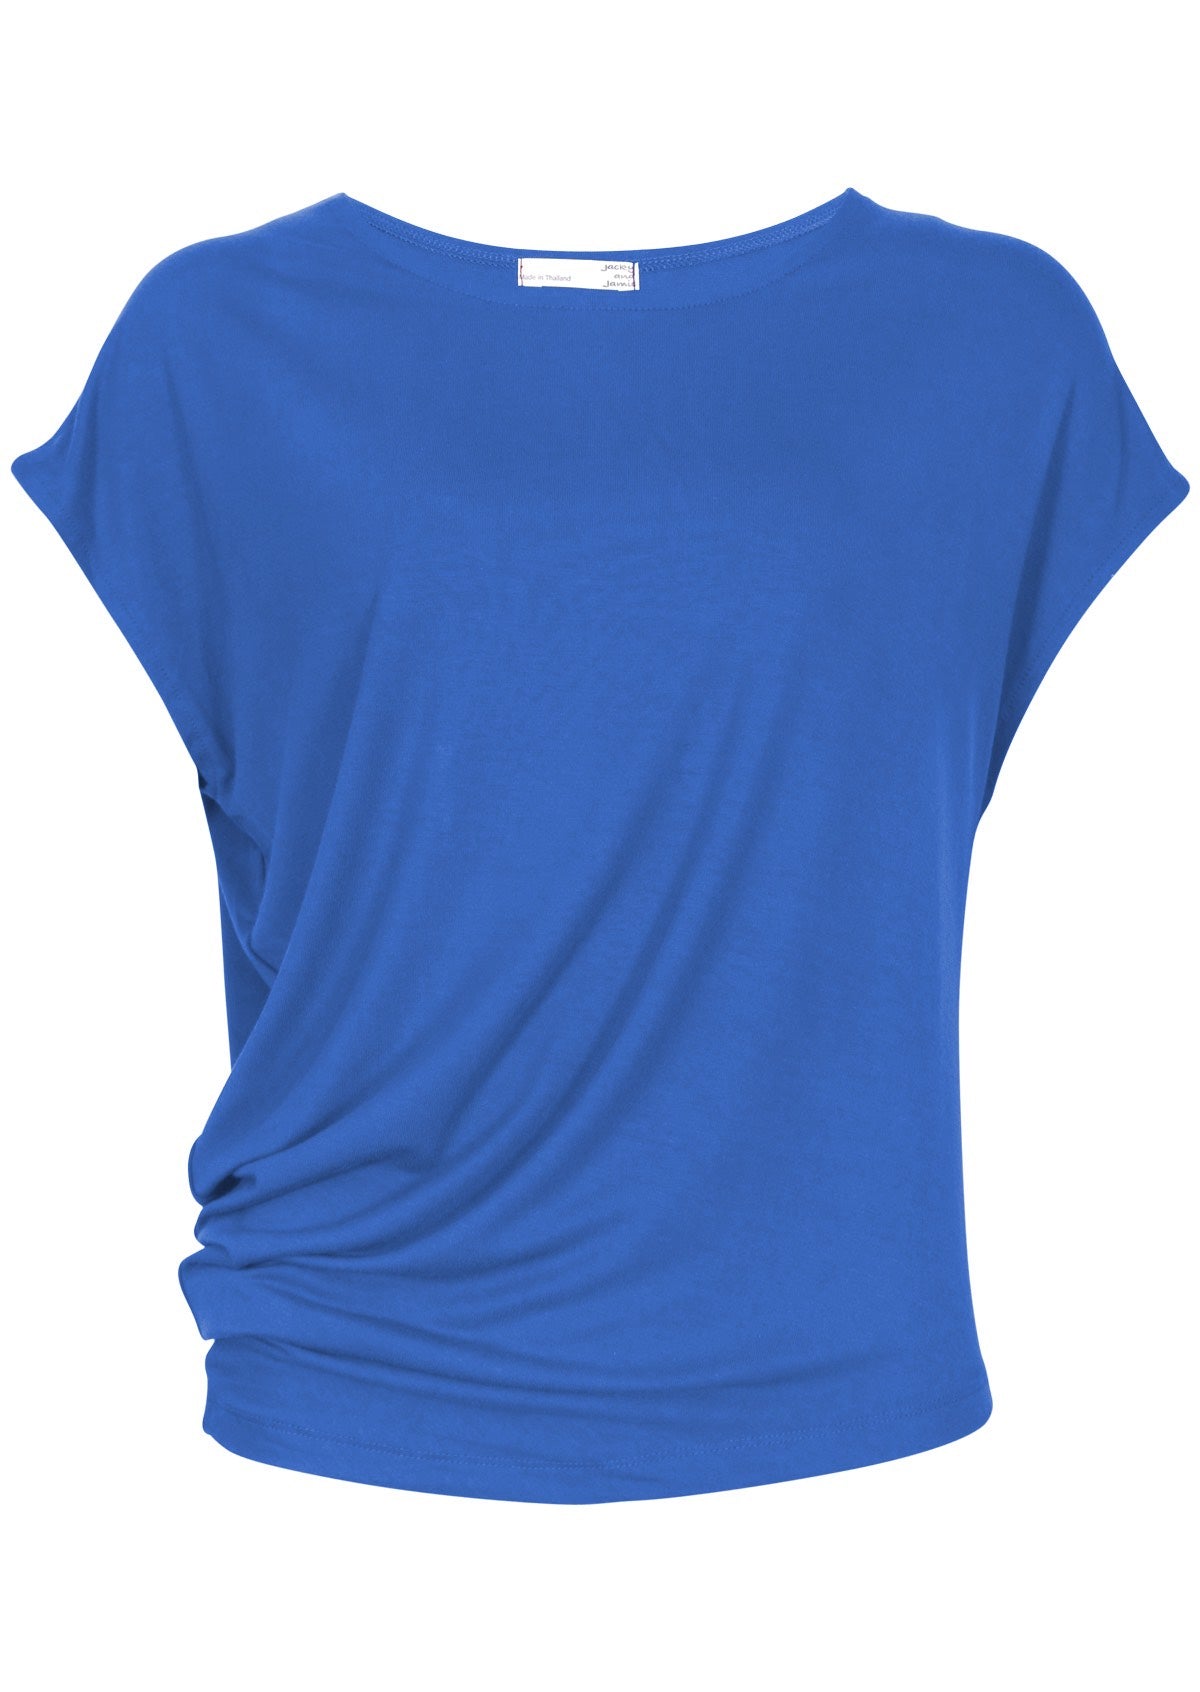 Women's basic blue rayon top